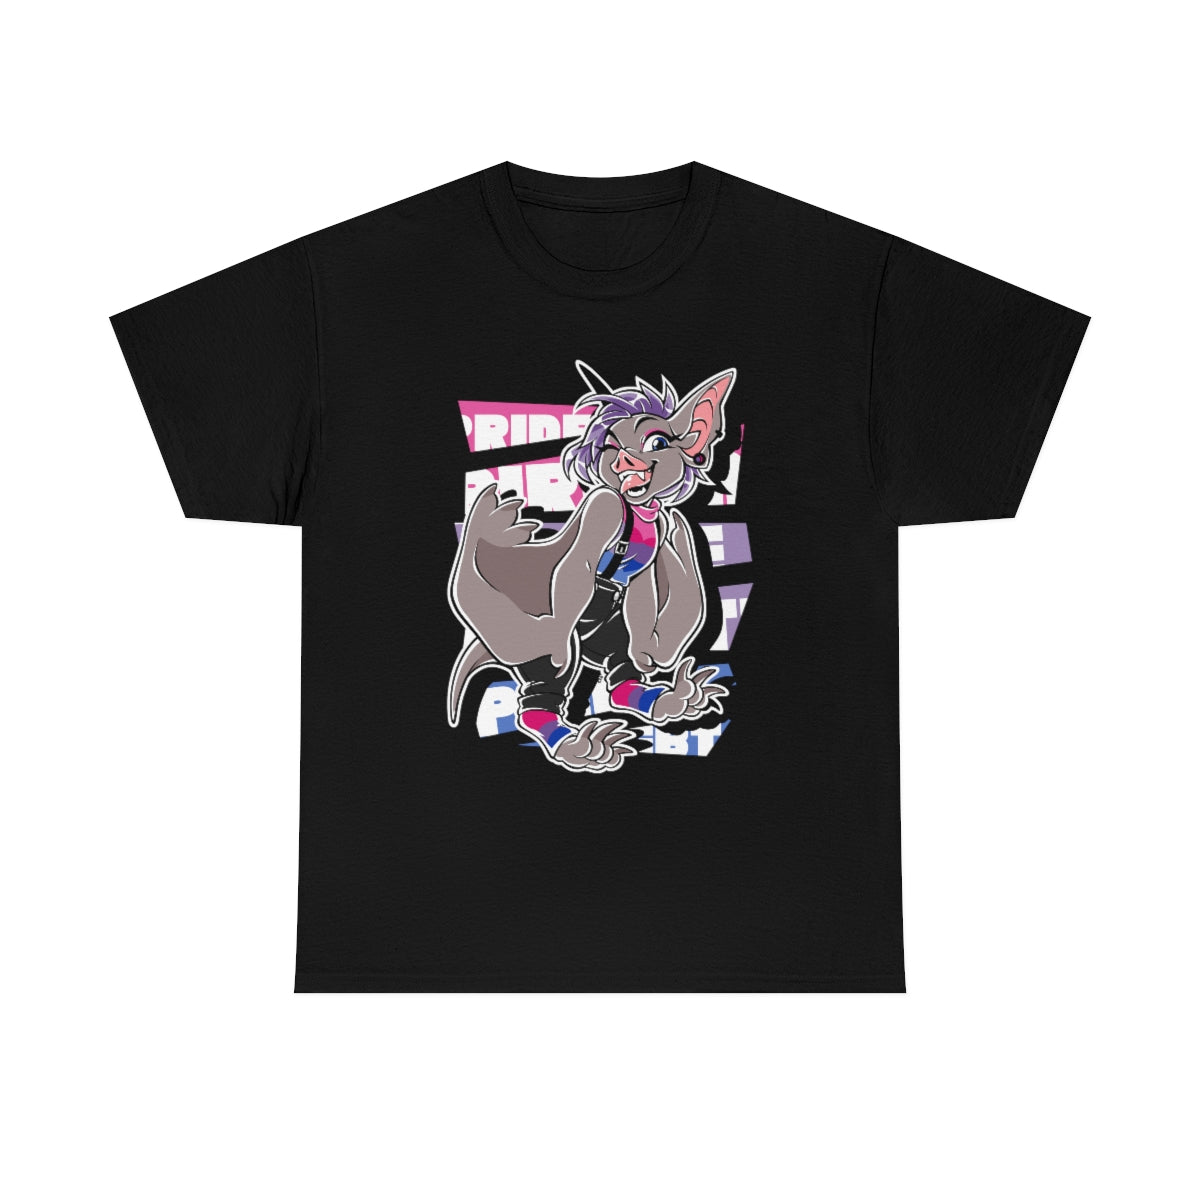 Biromantic Pride Hailey Bat - T-Shirt T-Shirt Artworktee Black S 